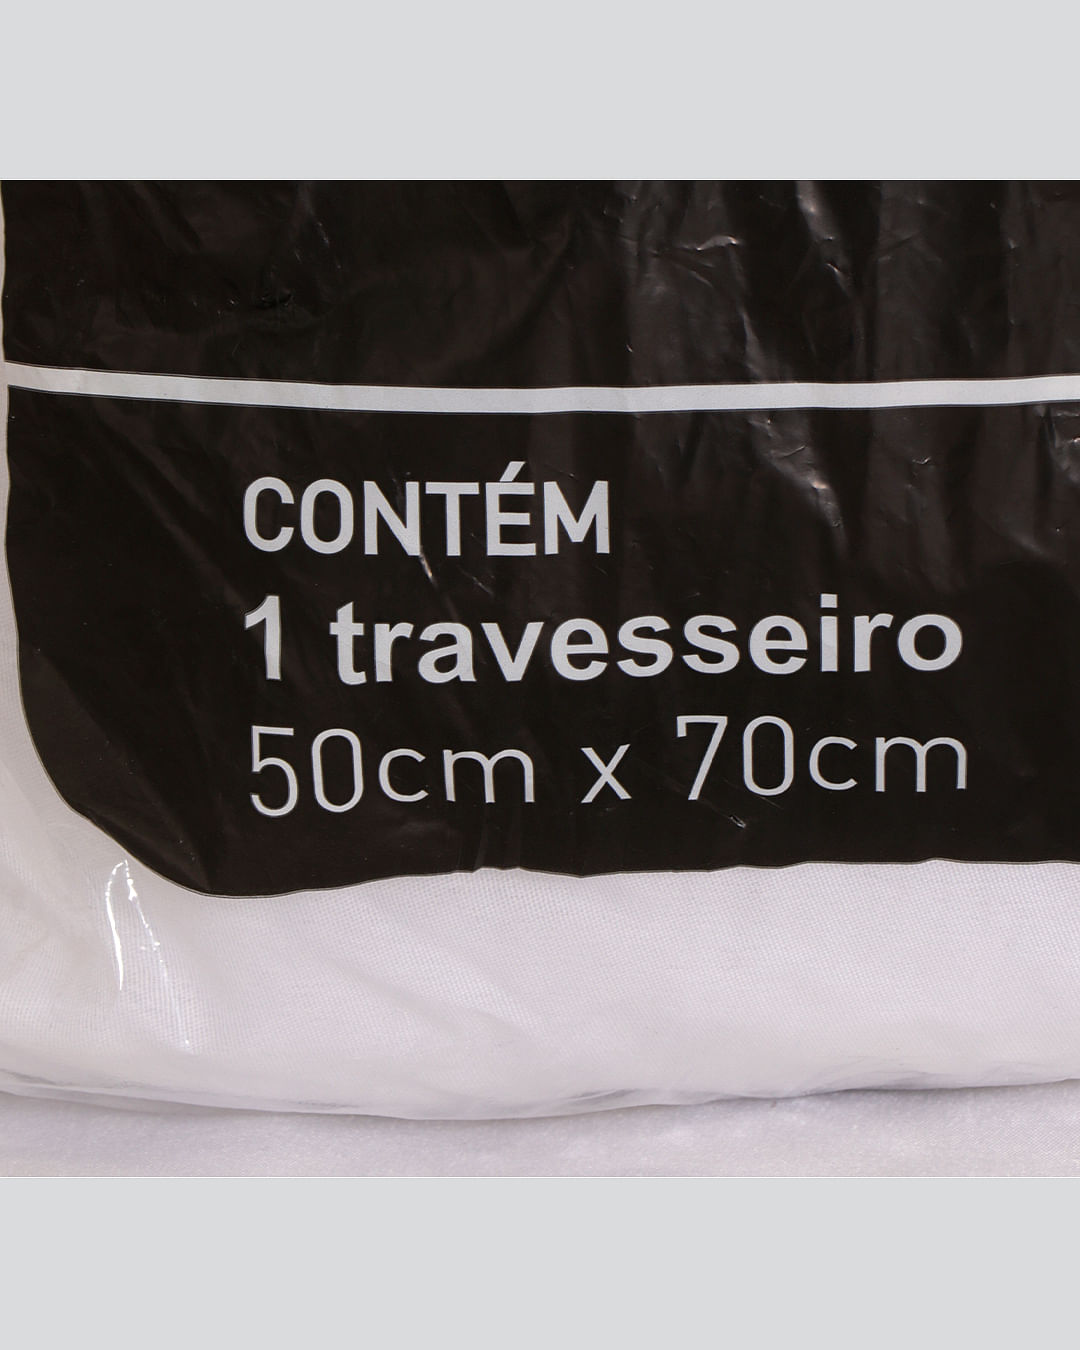 Travesseiro-50x70-Soft-Touch---Sortido